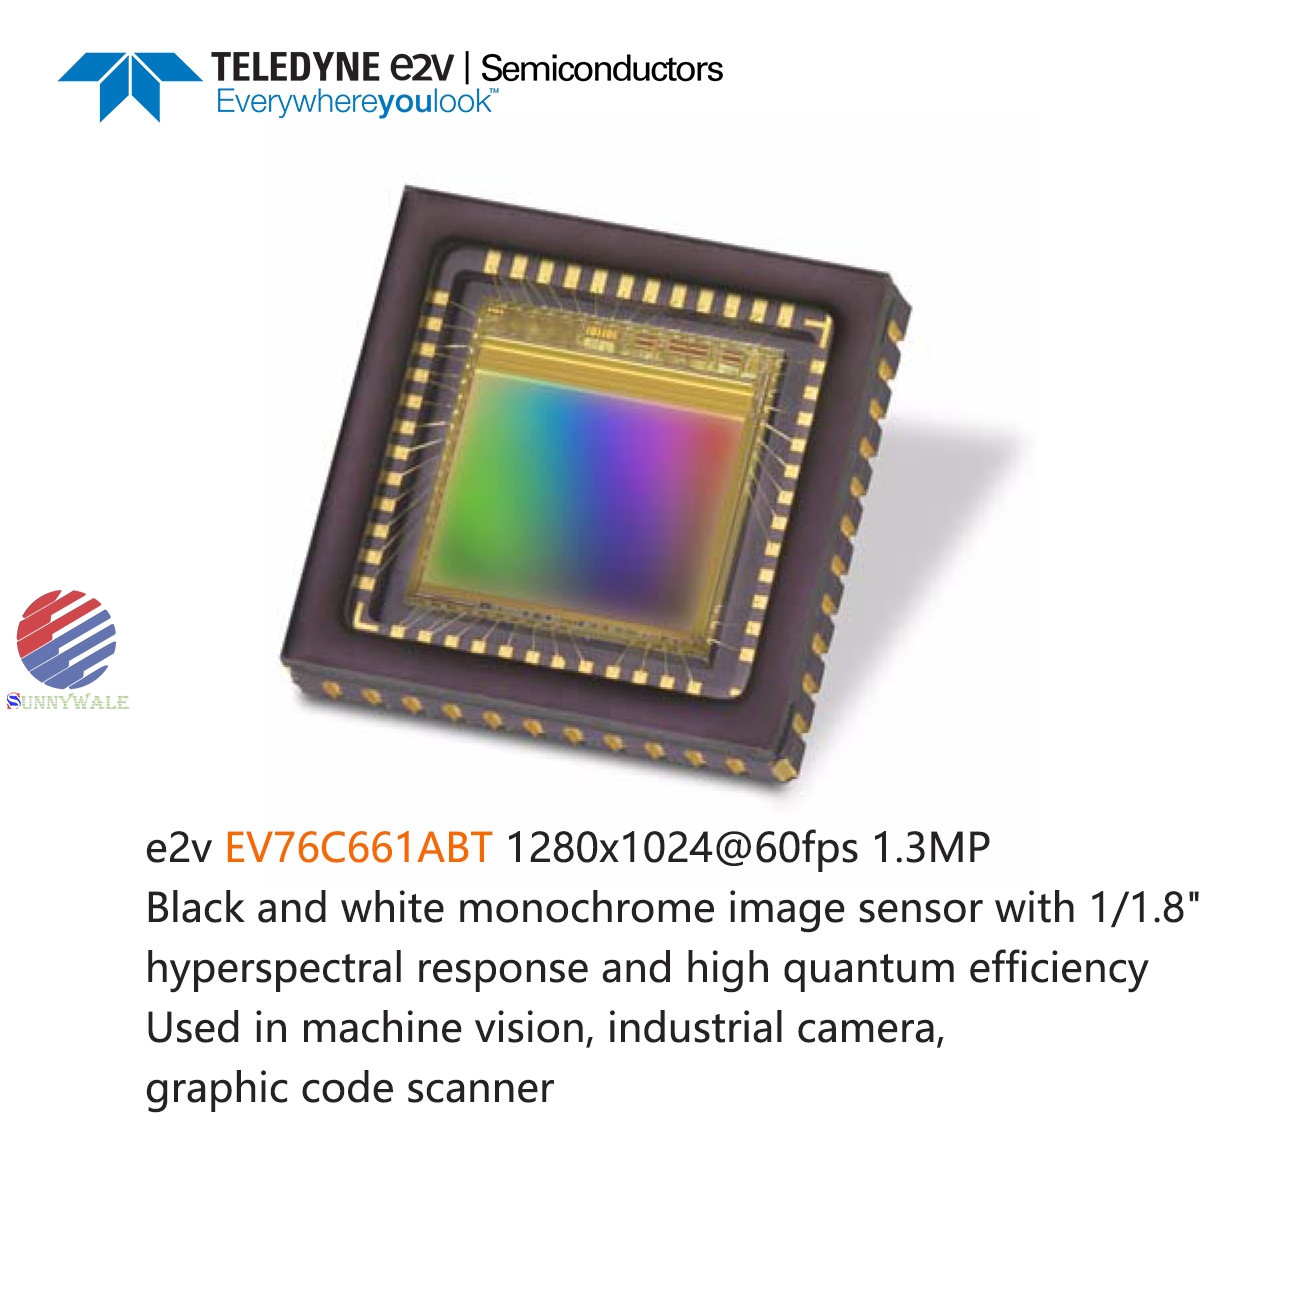 EV76C661ABT,EV76C661ACT, e2v image sensor, 1280x1024 1.3megapixel, 1.3MP photosensitive chip, 1/1.8-inch sensor chip, Industrial camera monochrome RGB cmos, black and white image sensor, hyperspectral response and high quantum efficiency cmos,CMOS SENSOR with ultra high sensitivity is comparable to CCD,global shutter CMOS Sensor，Large target plane